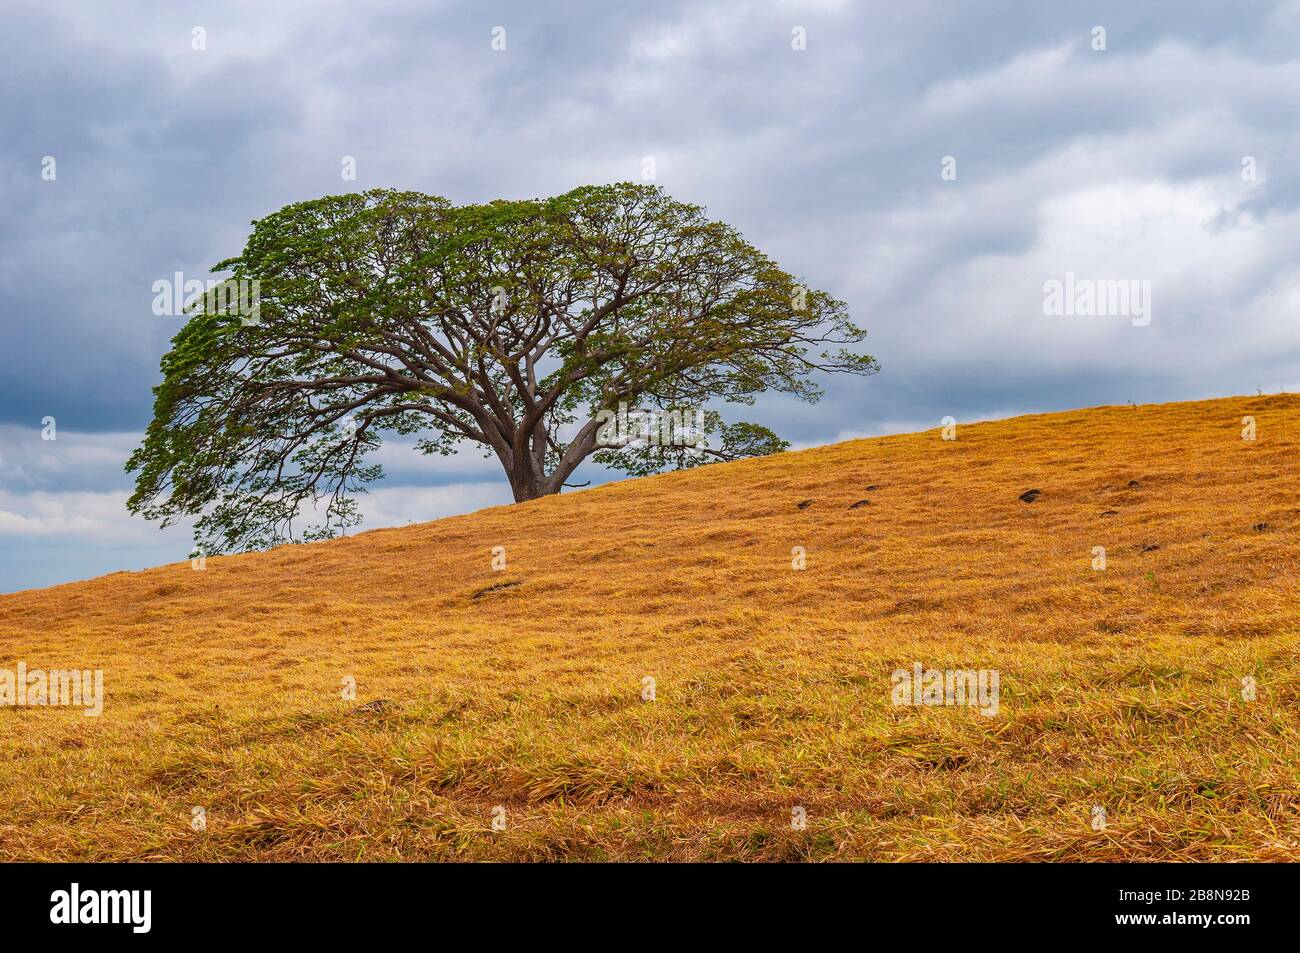 The Guanacaste tree (Enterolobium cyclocarpum) is the national tree of Costa Rica, Guanacaste province. Stock Photo